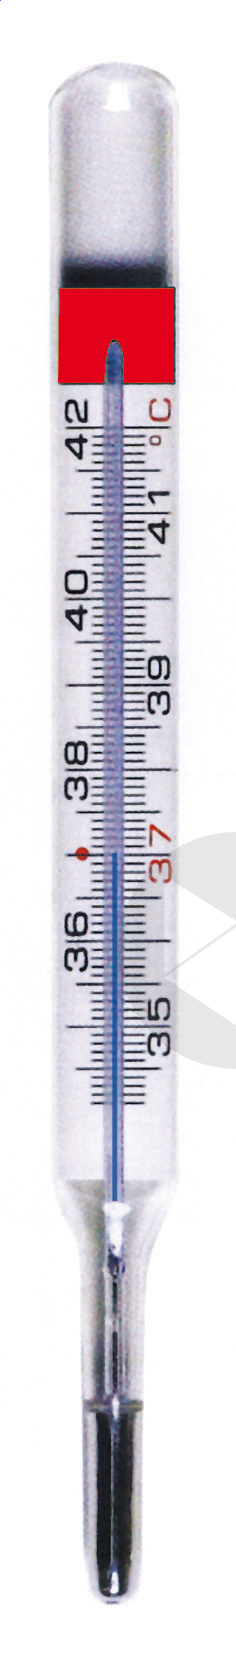 Thermomètre Gallium Torm